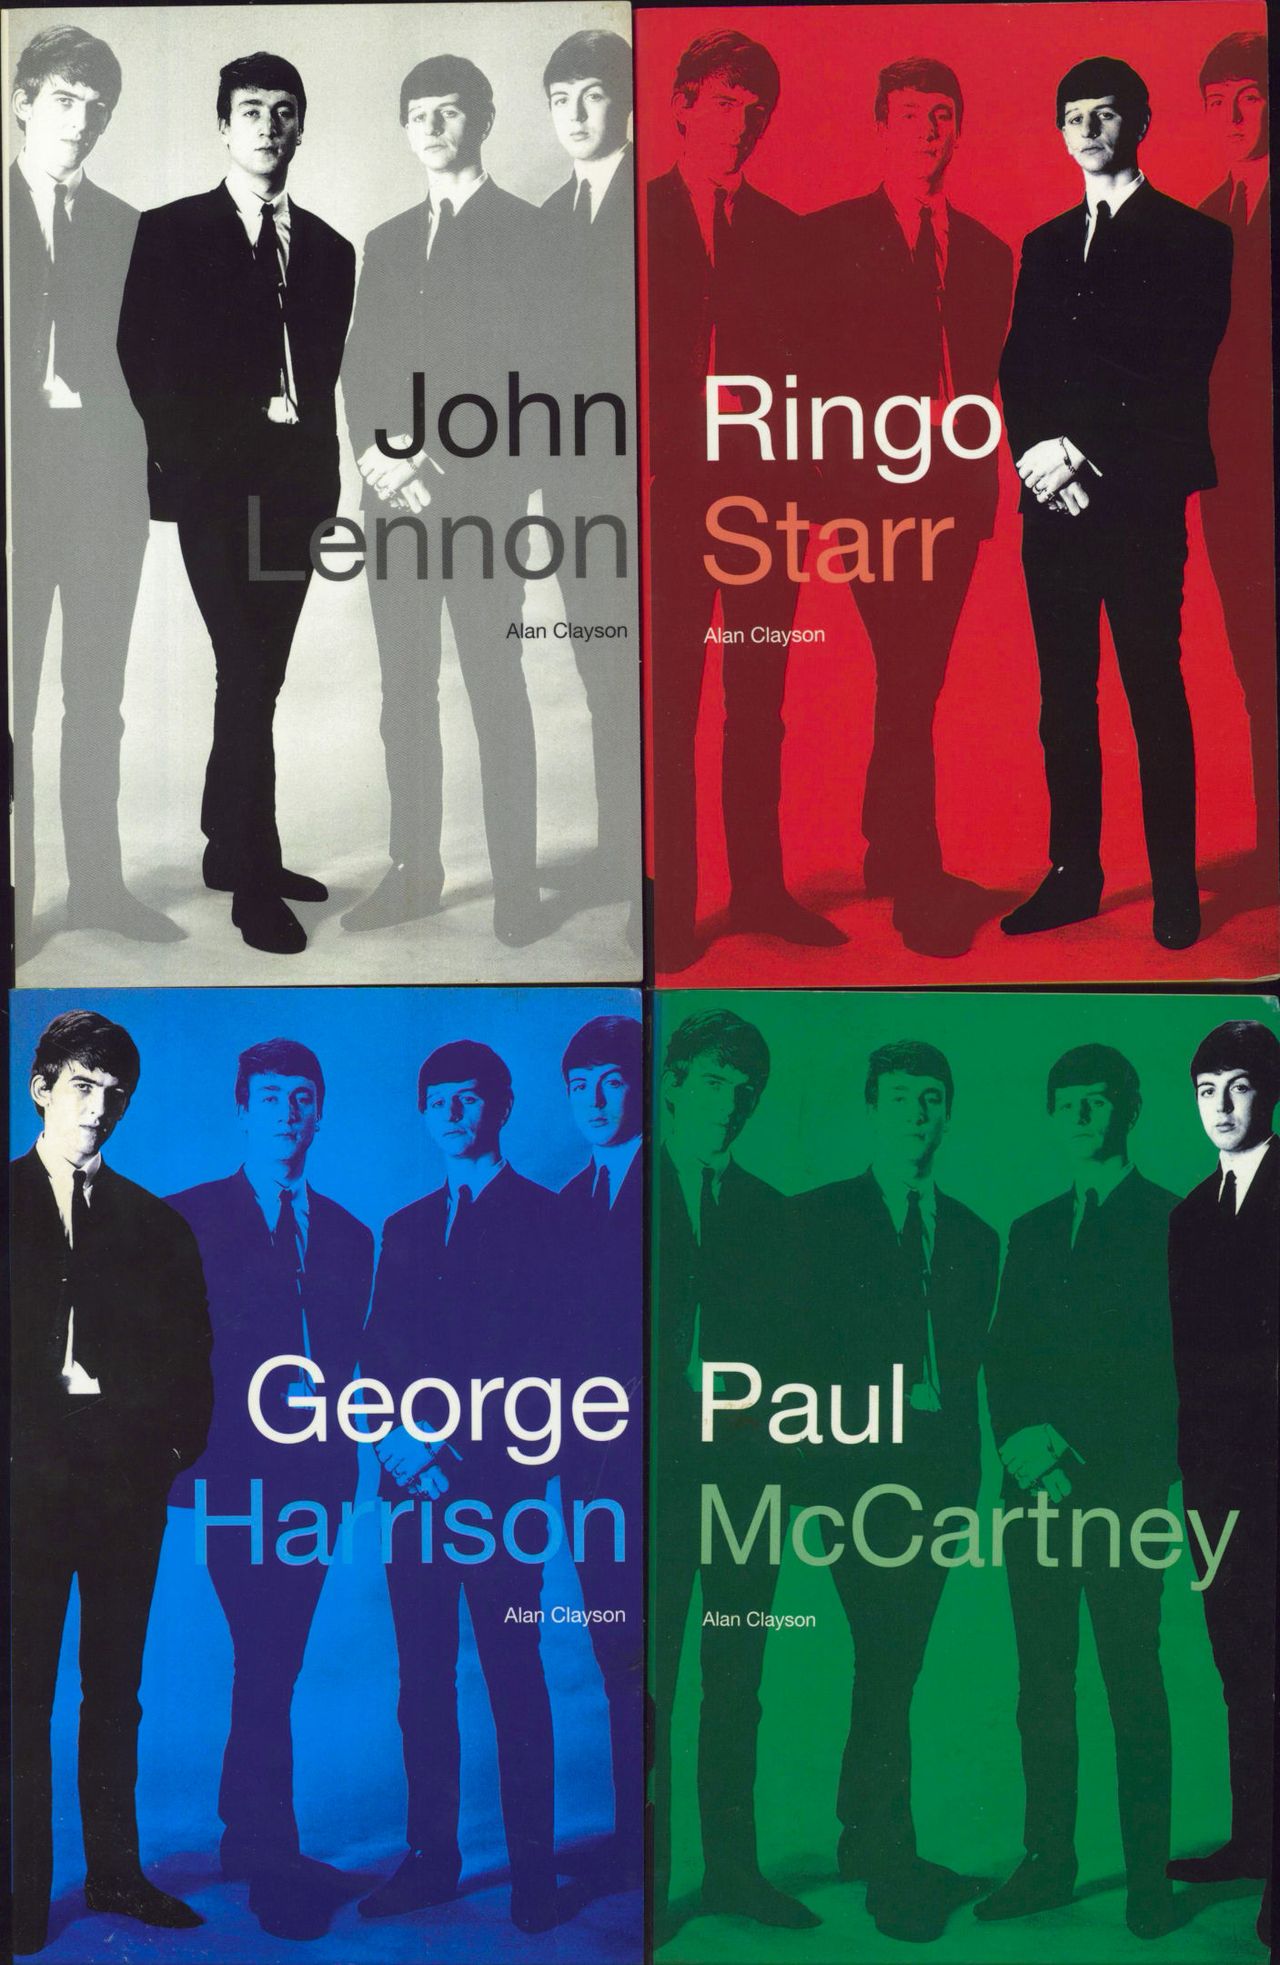 The Beatles John Lennon / Paul McCartney / George Harrison / Ringo